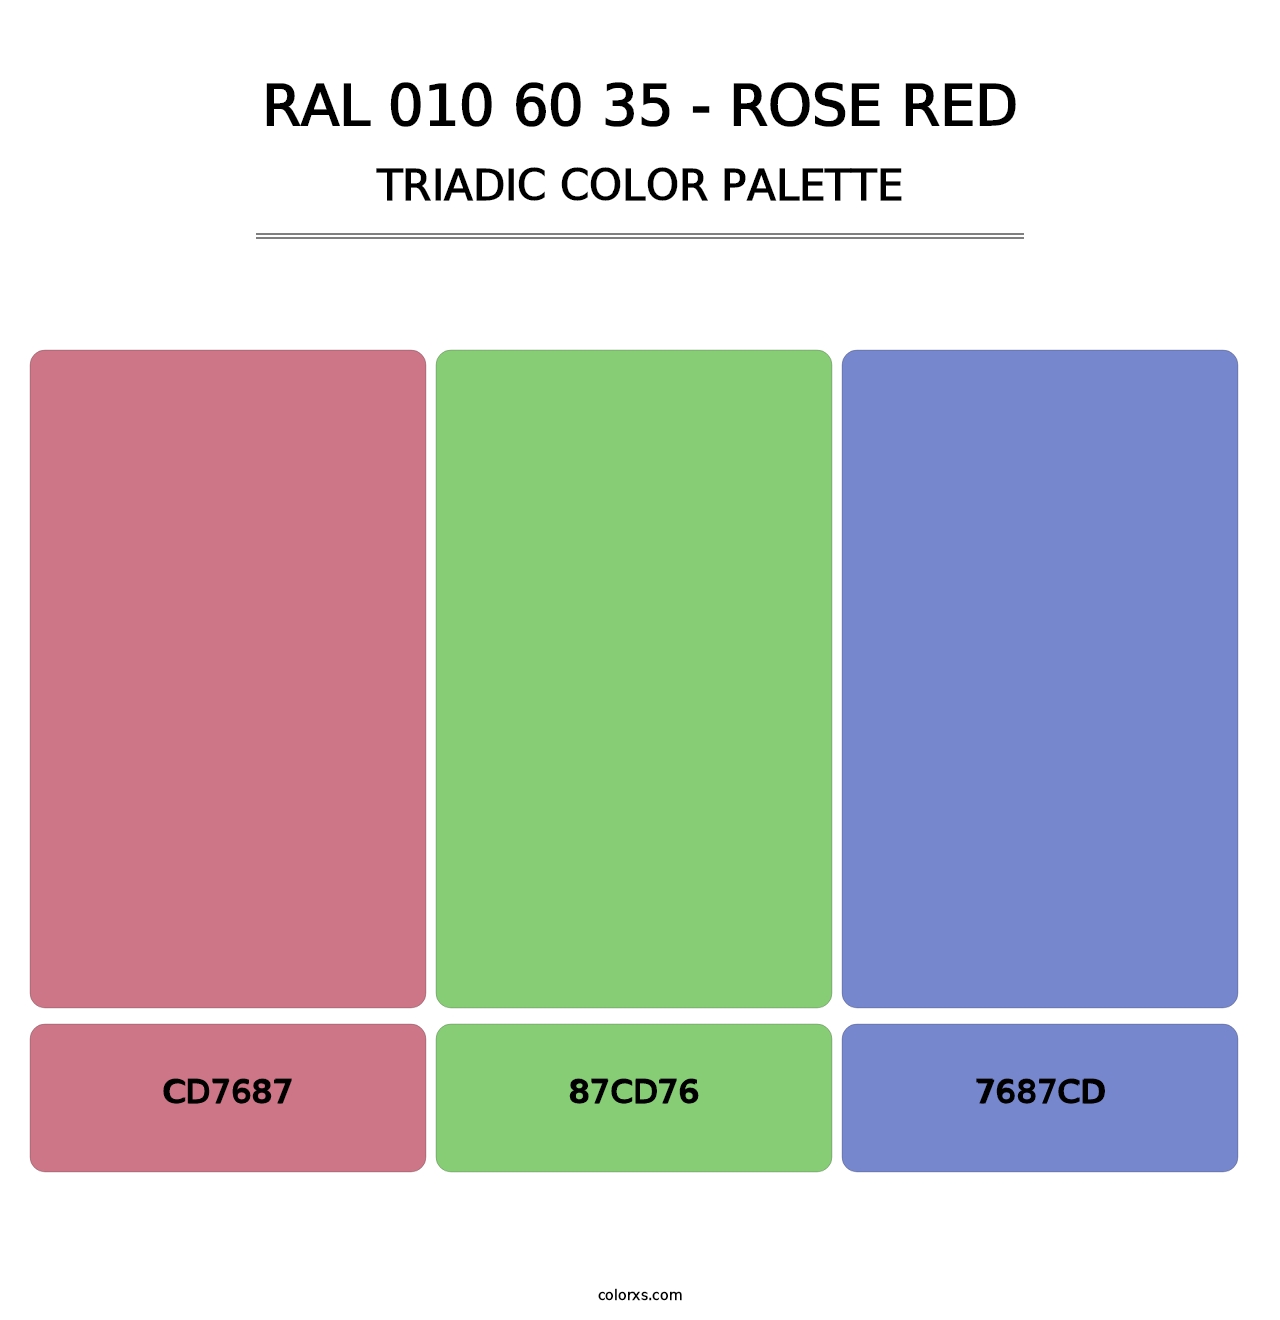 RAL 010 60 35 - Rose Red - Triadic Color Palette